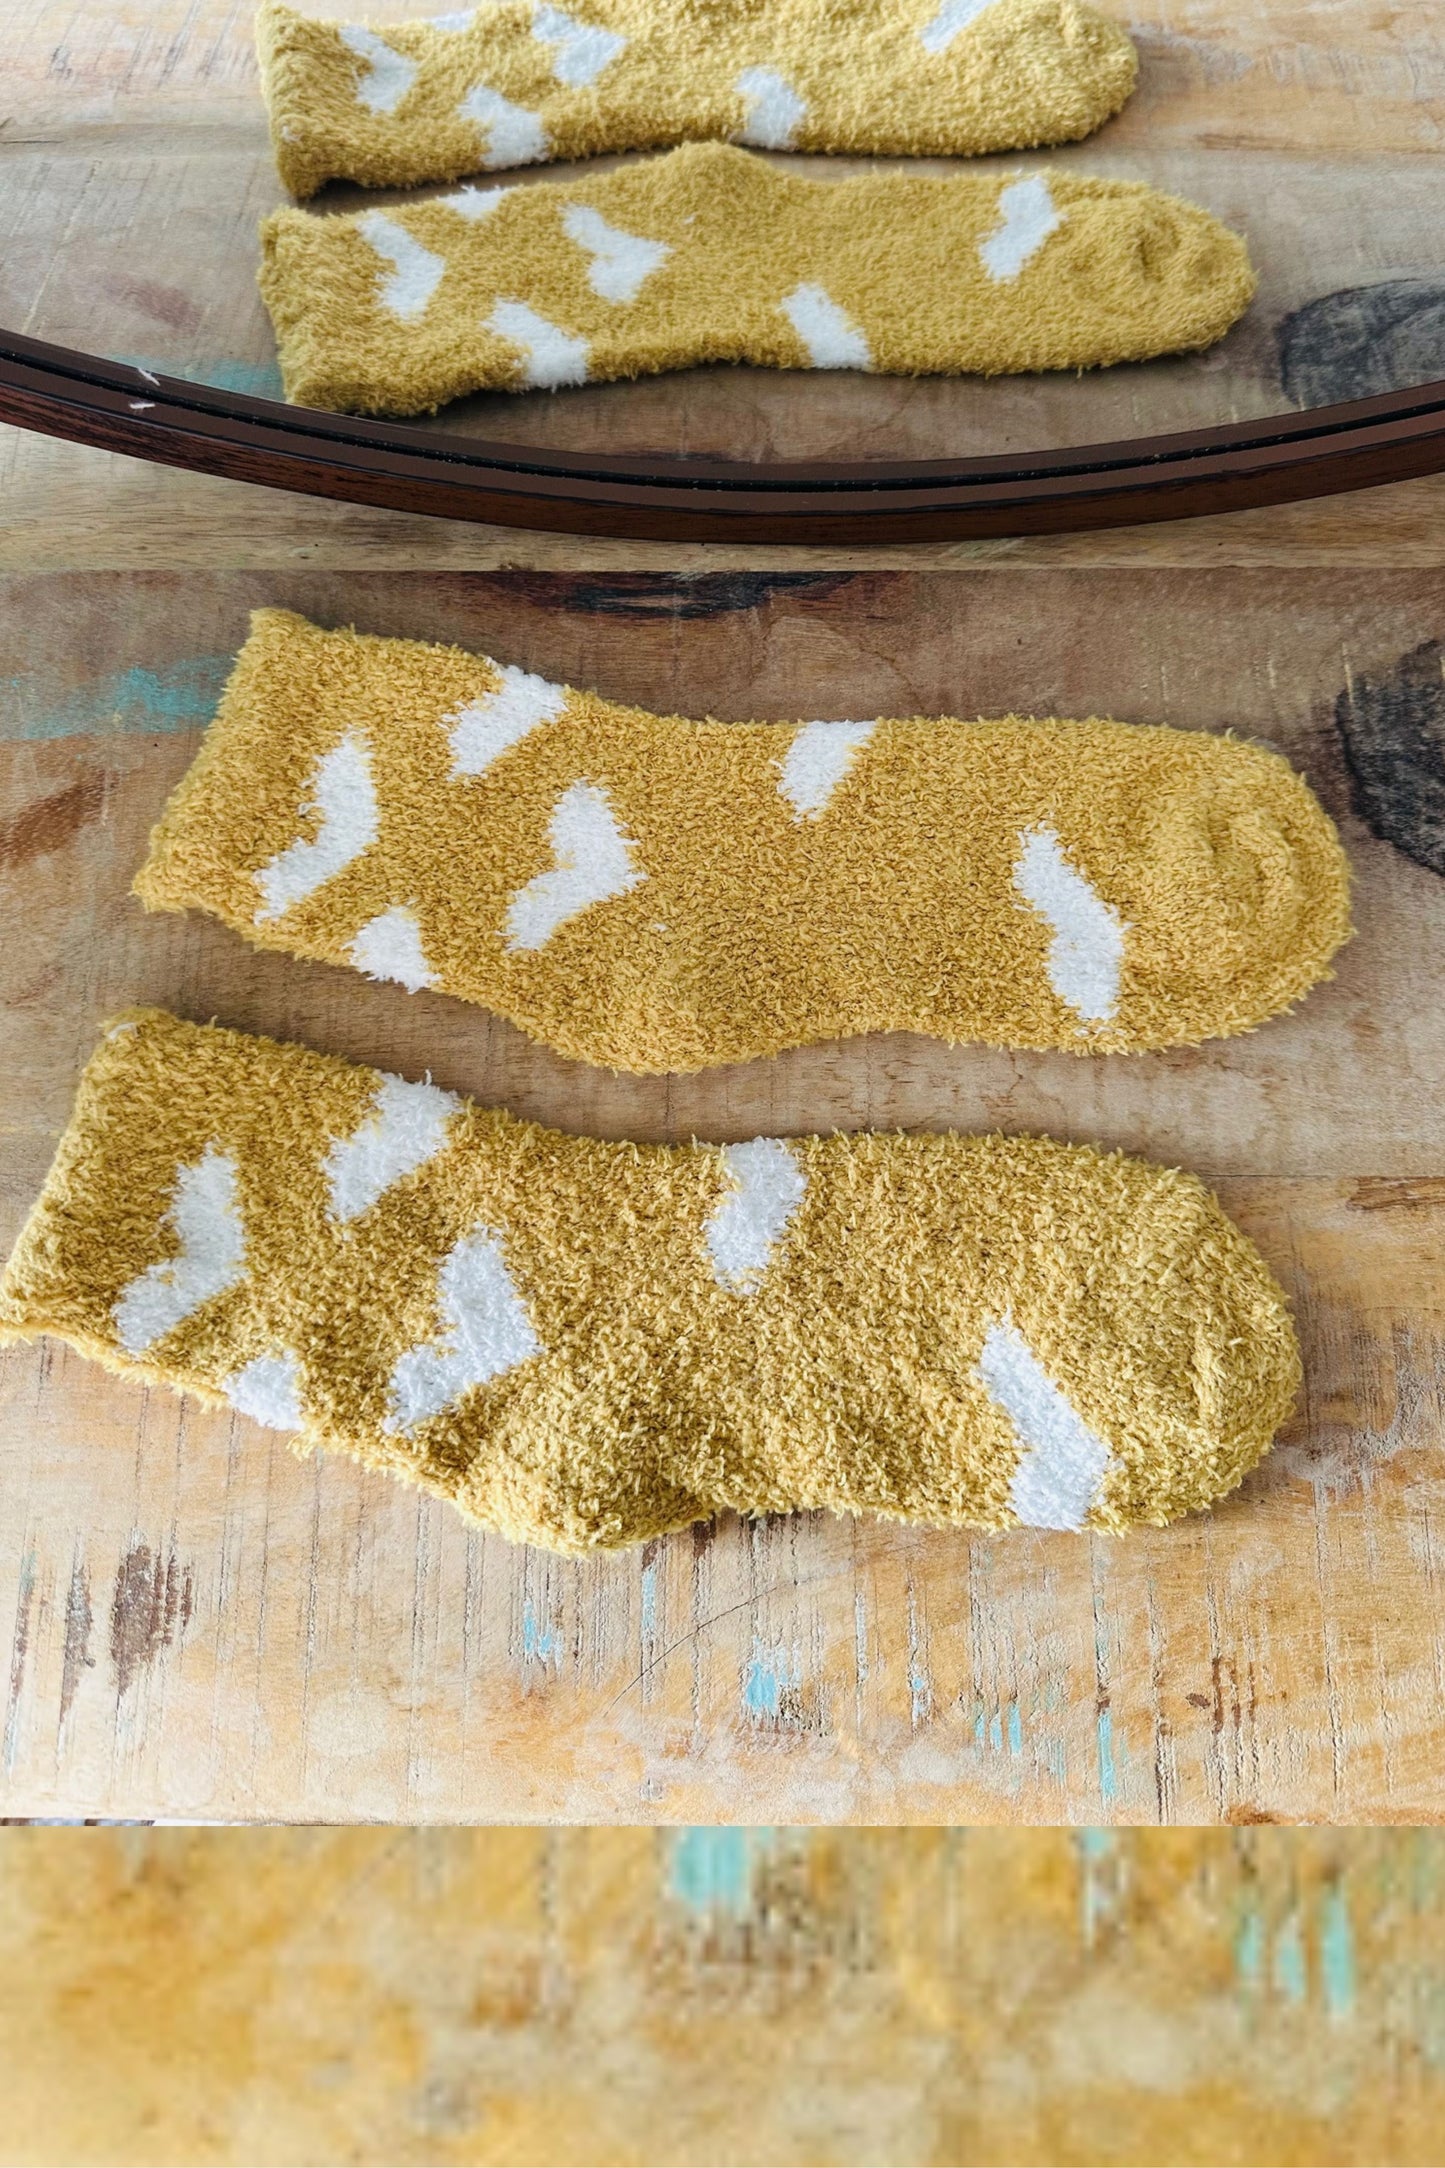 Golden Sunshine Hearts Soft and Fuzzy Socks